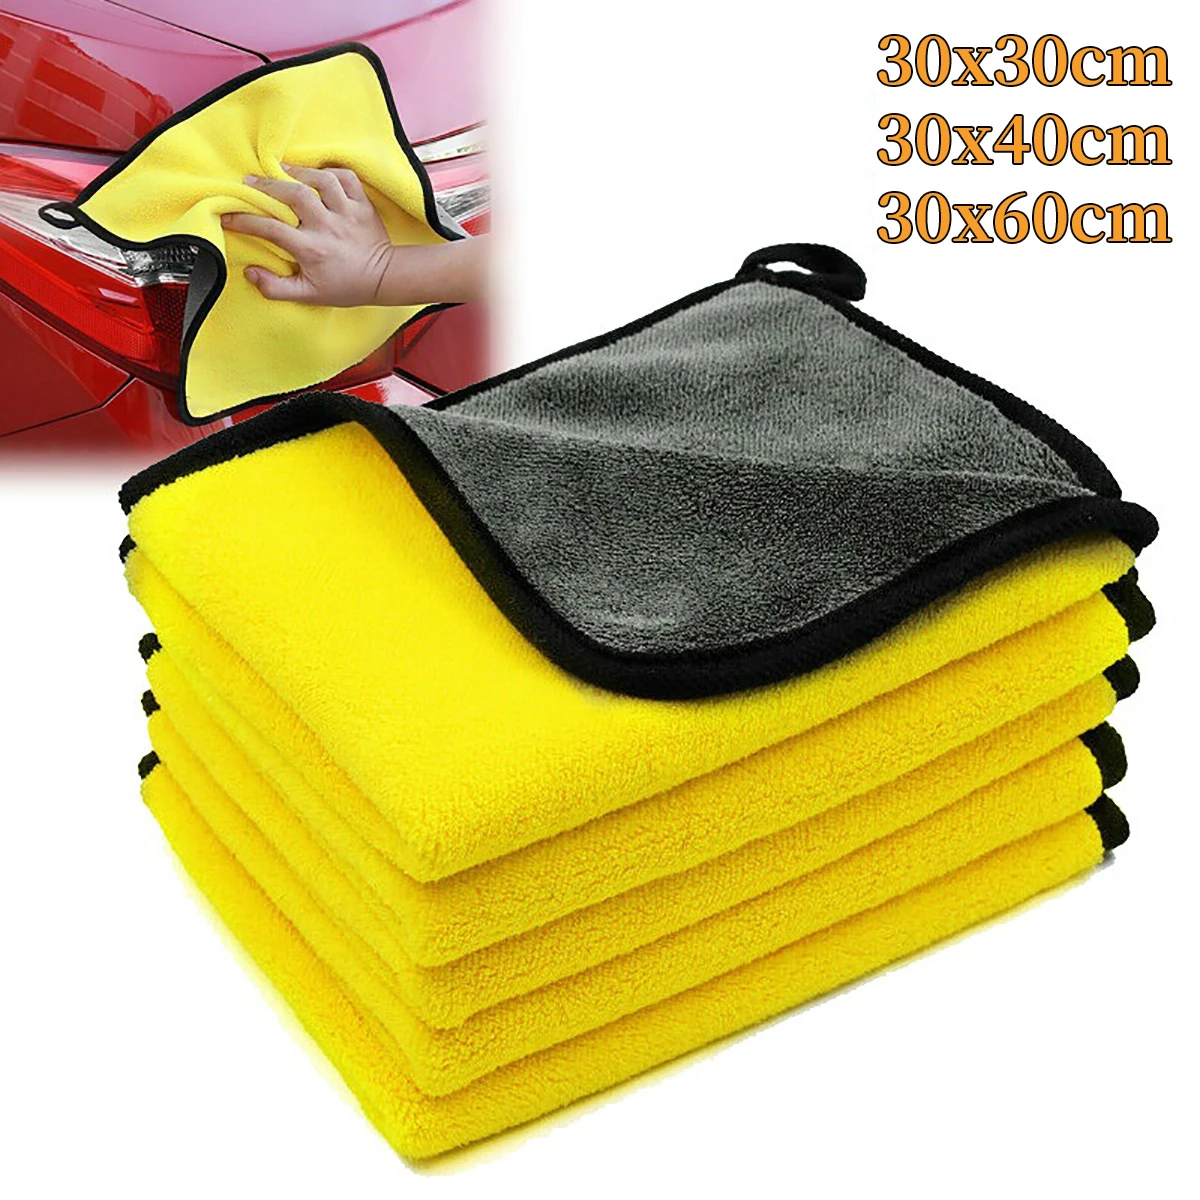 Car Wash Microfiber Towel Car Cleaning Drying Cloth Hemming Extra Soft Car Care Detailing WashTowel Never Scrat High Density New